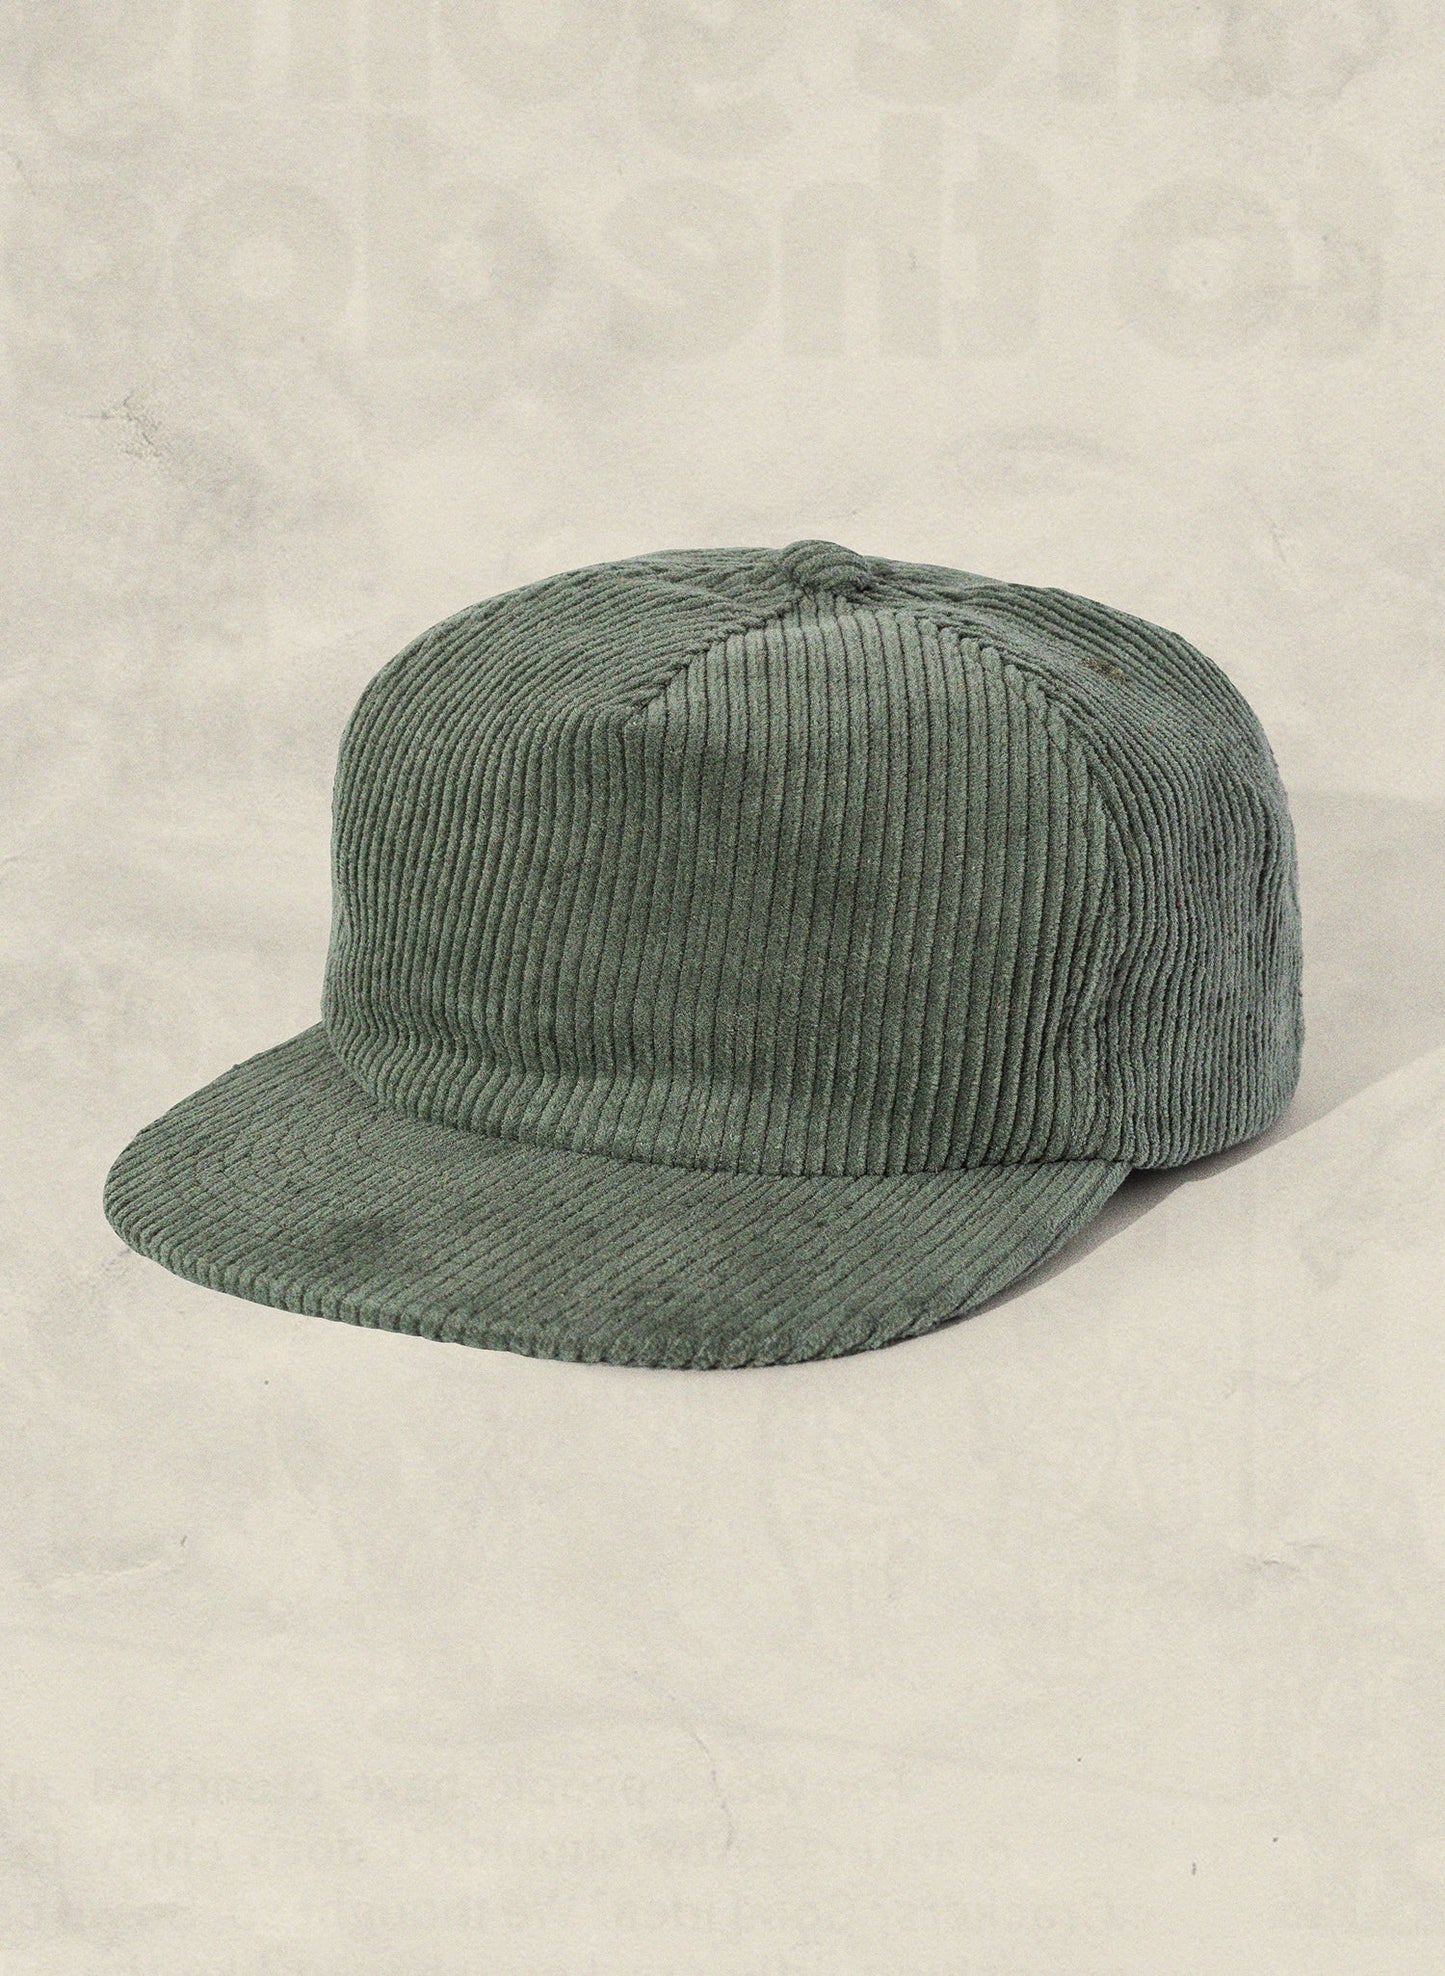 Weld Mfg Field Trip Hat - Unstructured 5 panel corduroy strapback hat, vintage inspired baseball hat, green